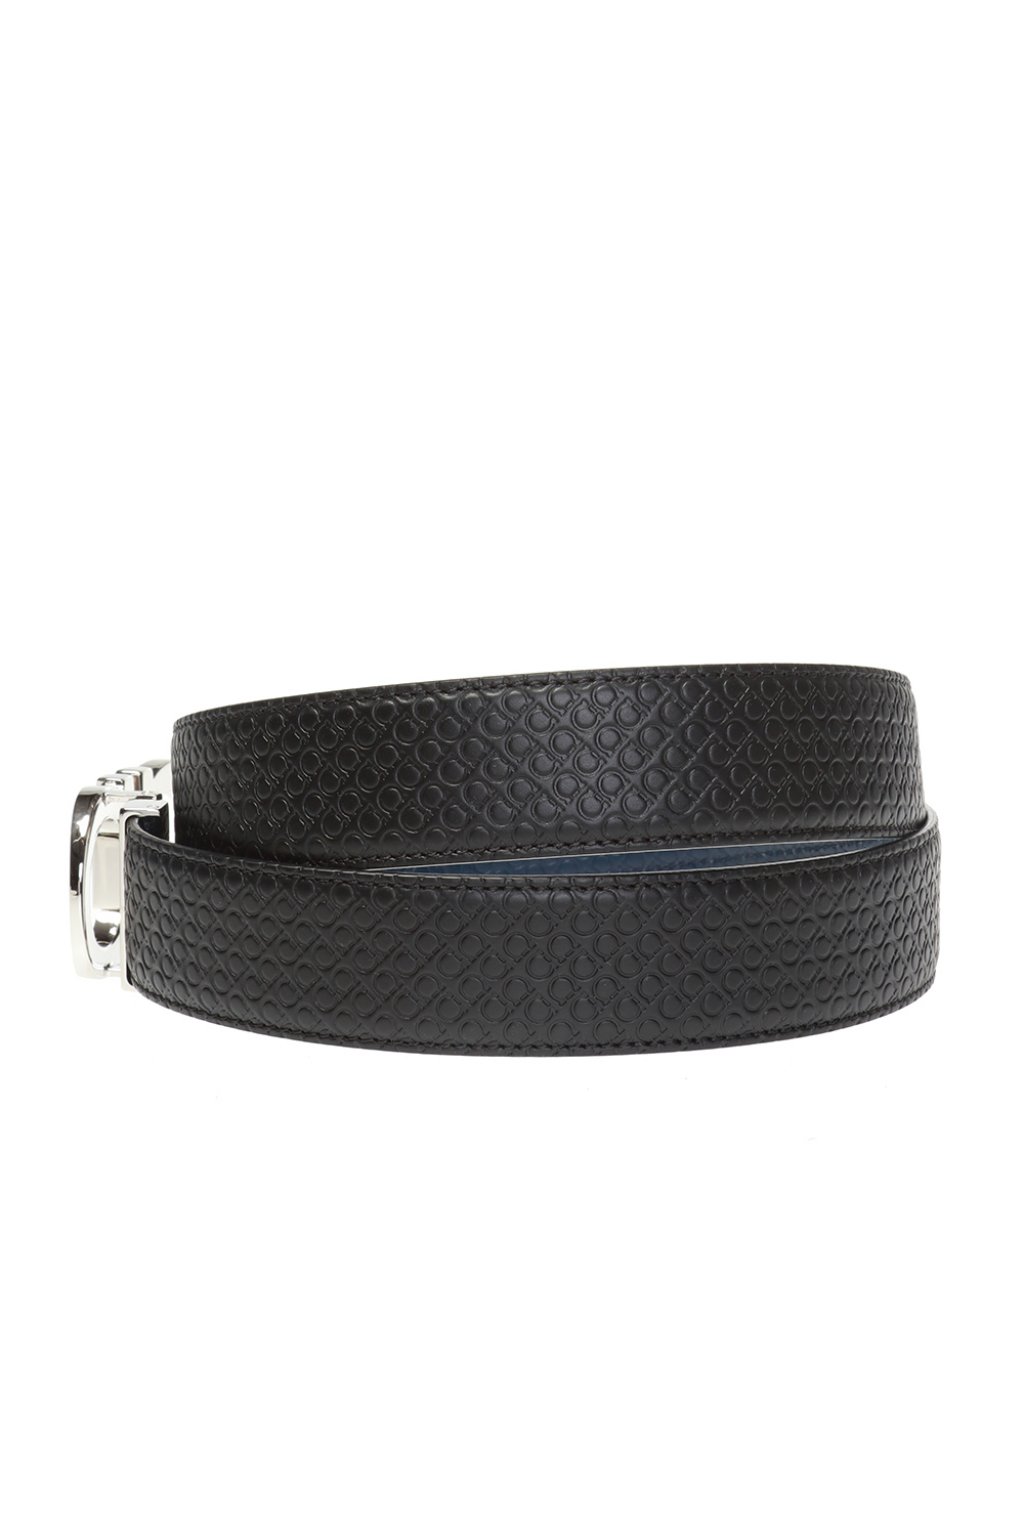 FERRAGAMO: belt for man - Black  Ferragamo belt 679535 714462 online at